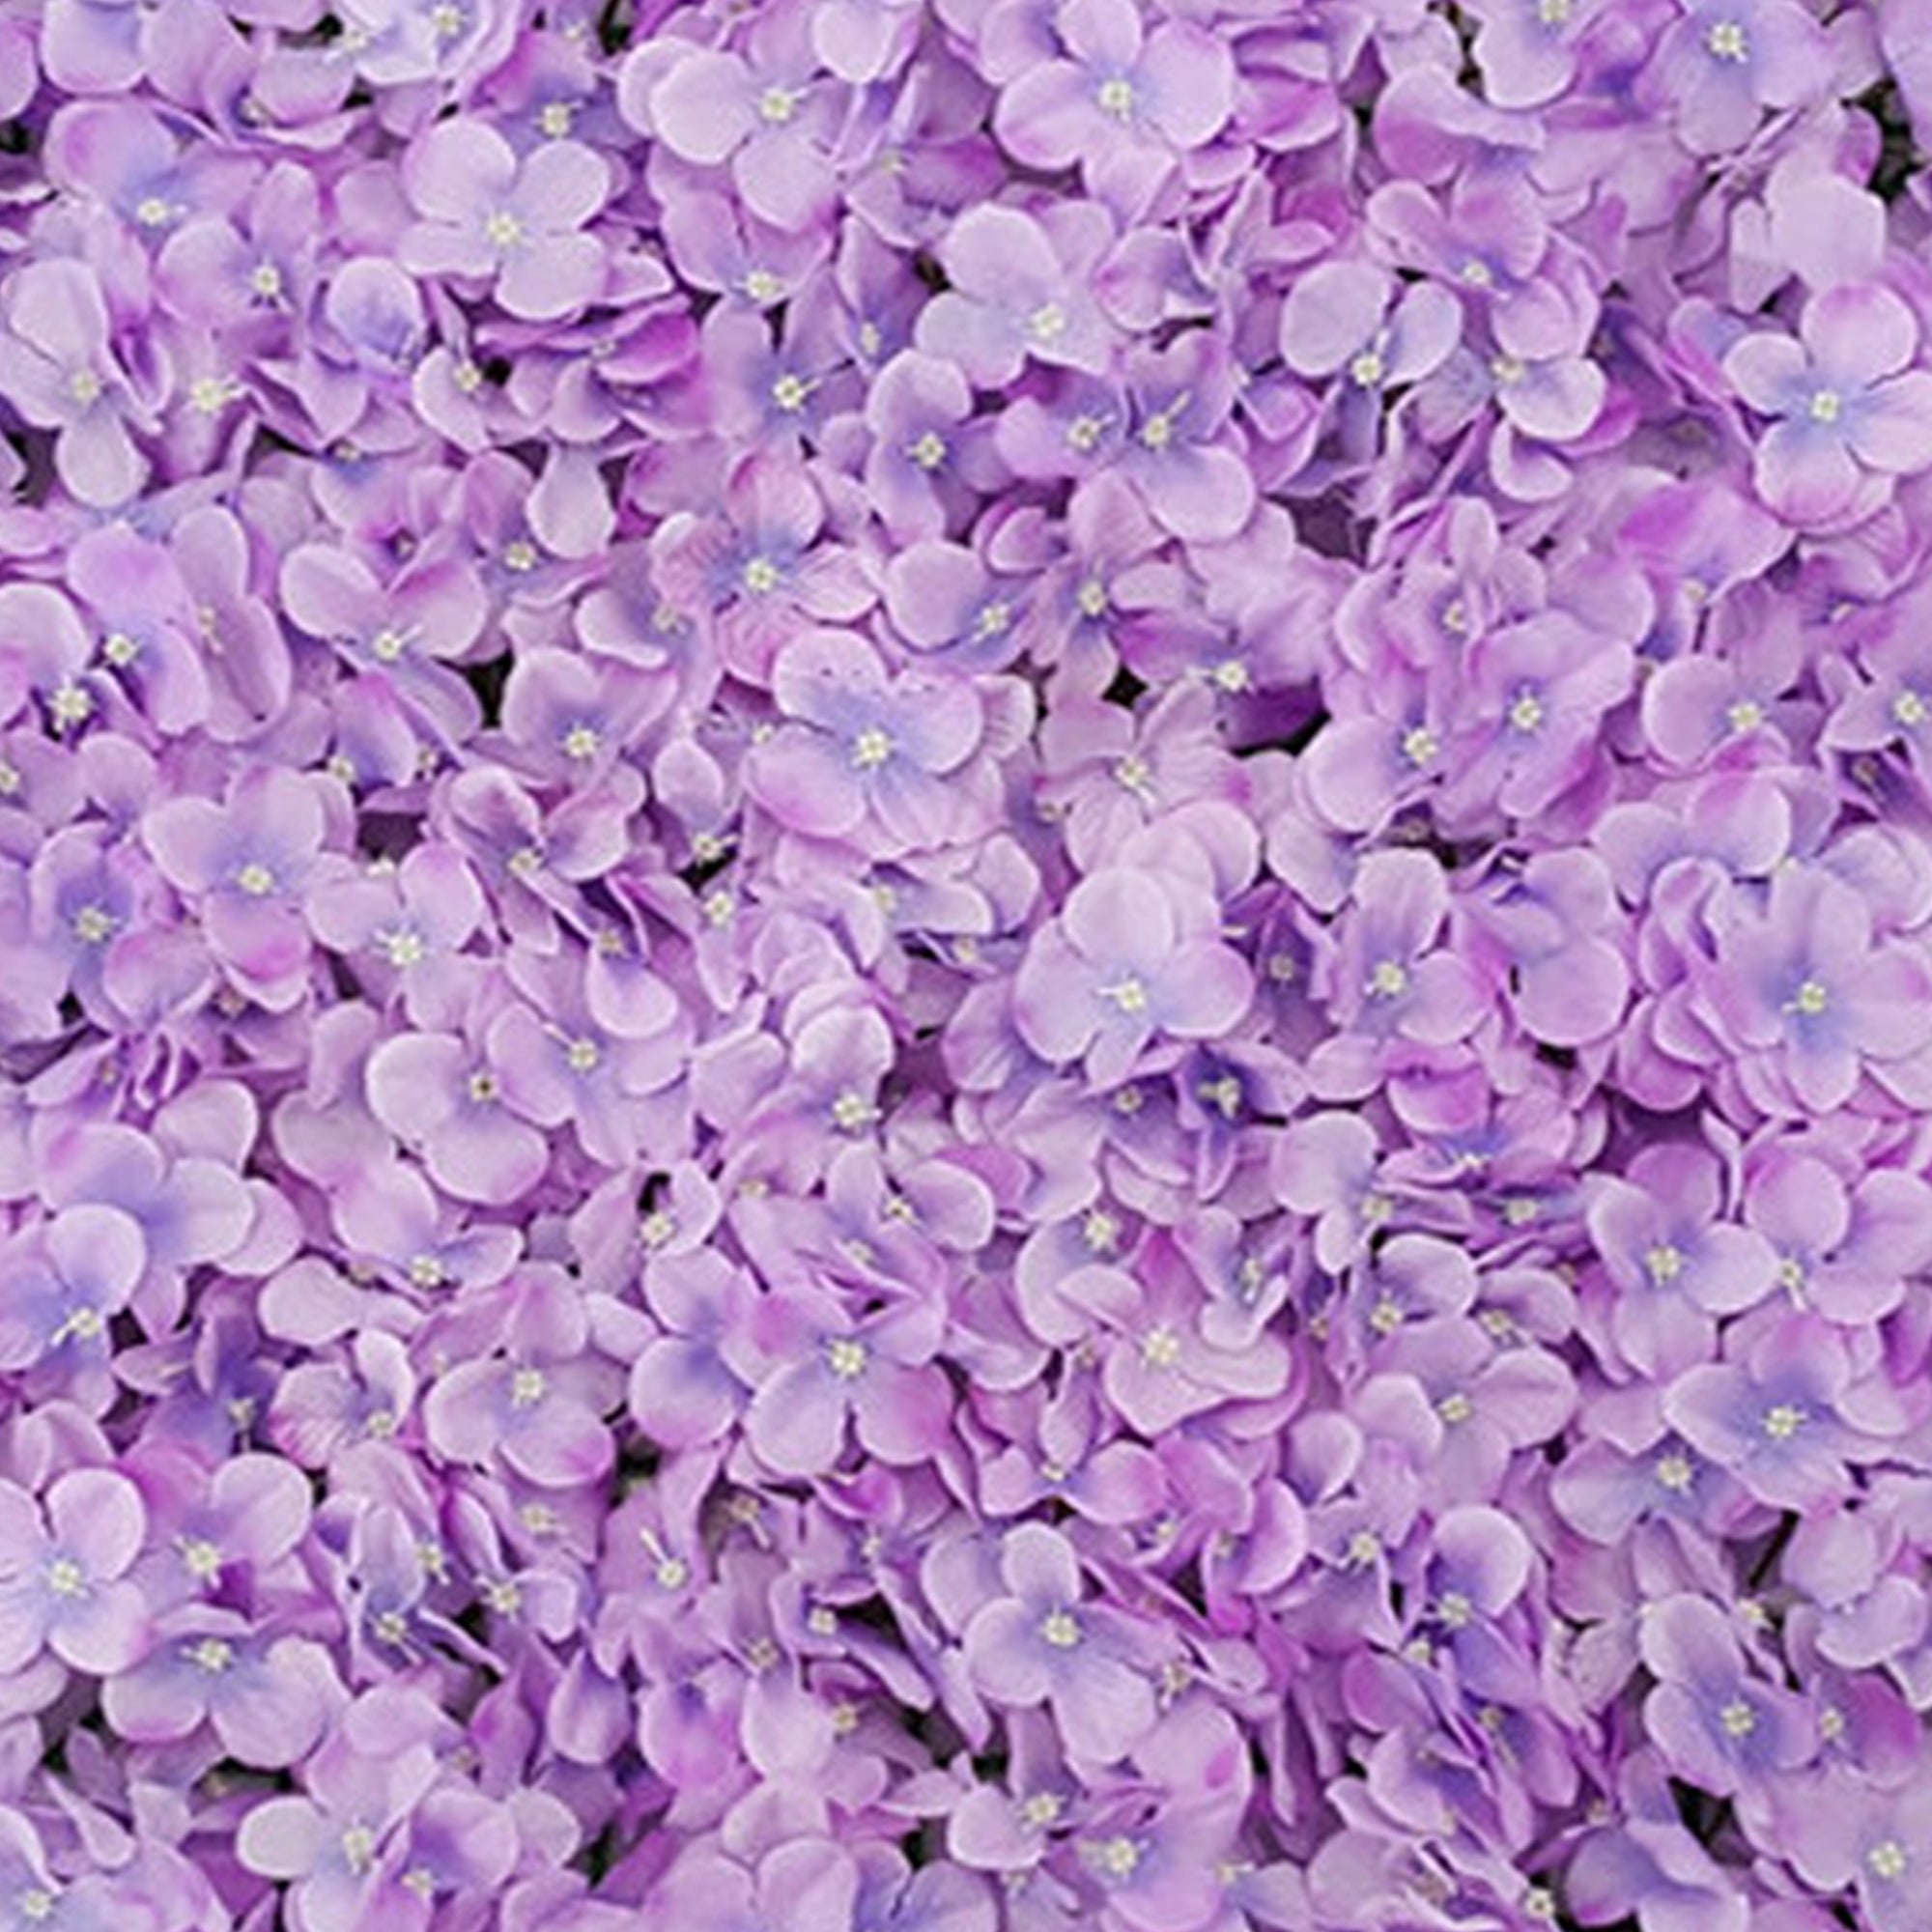 Artficial Flower Wall Lavender Silk Hydrangea Panel